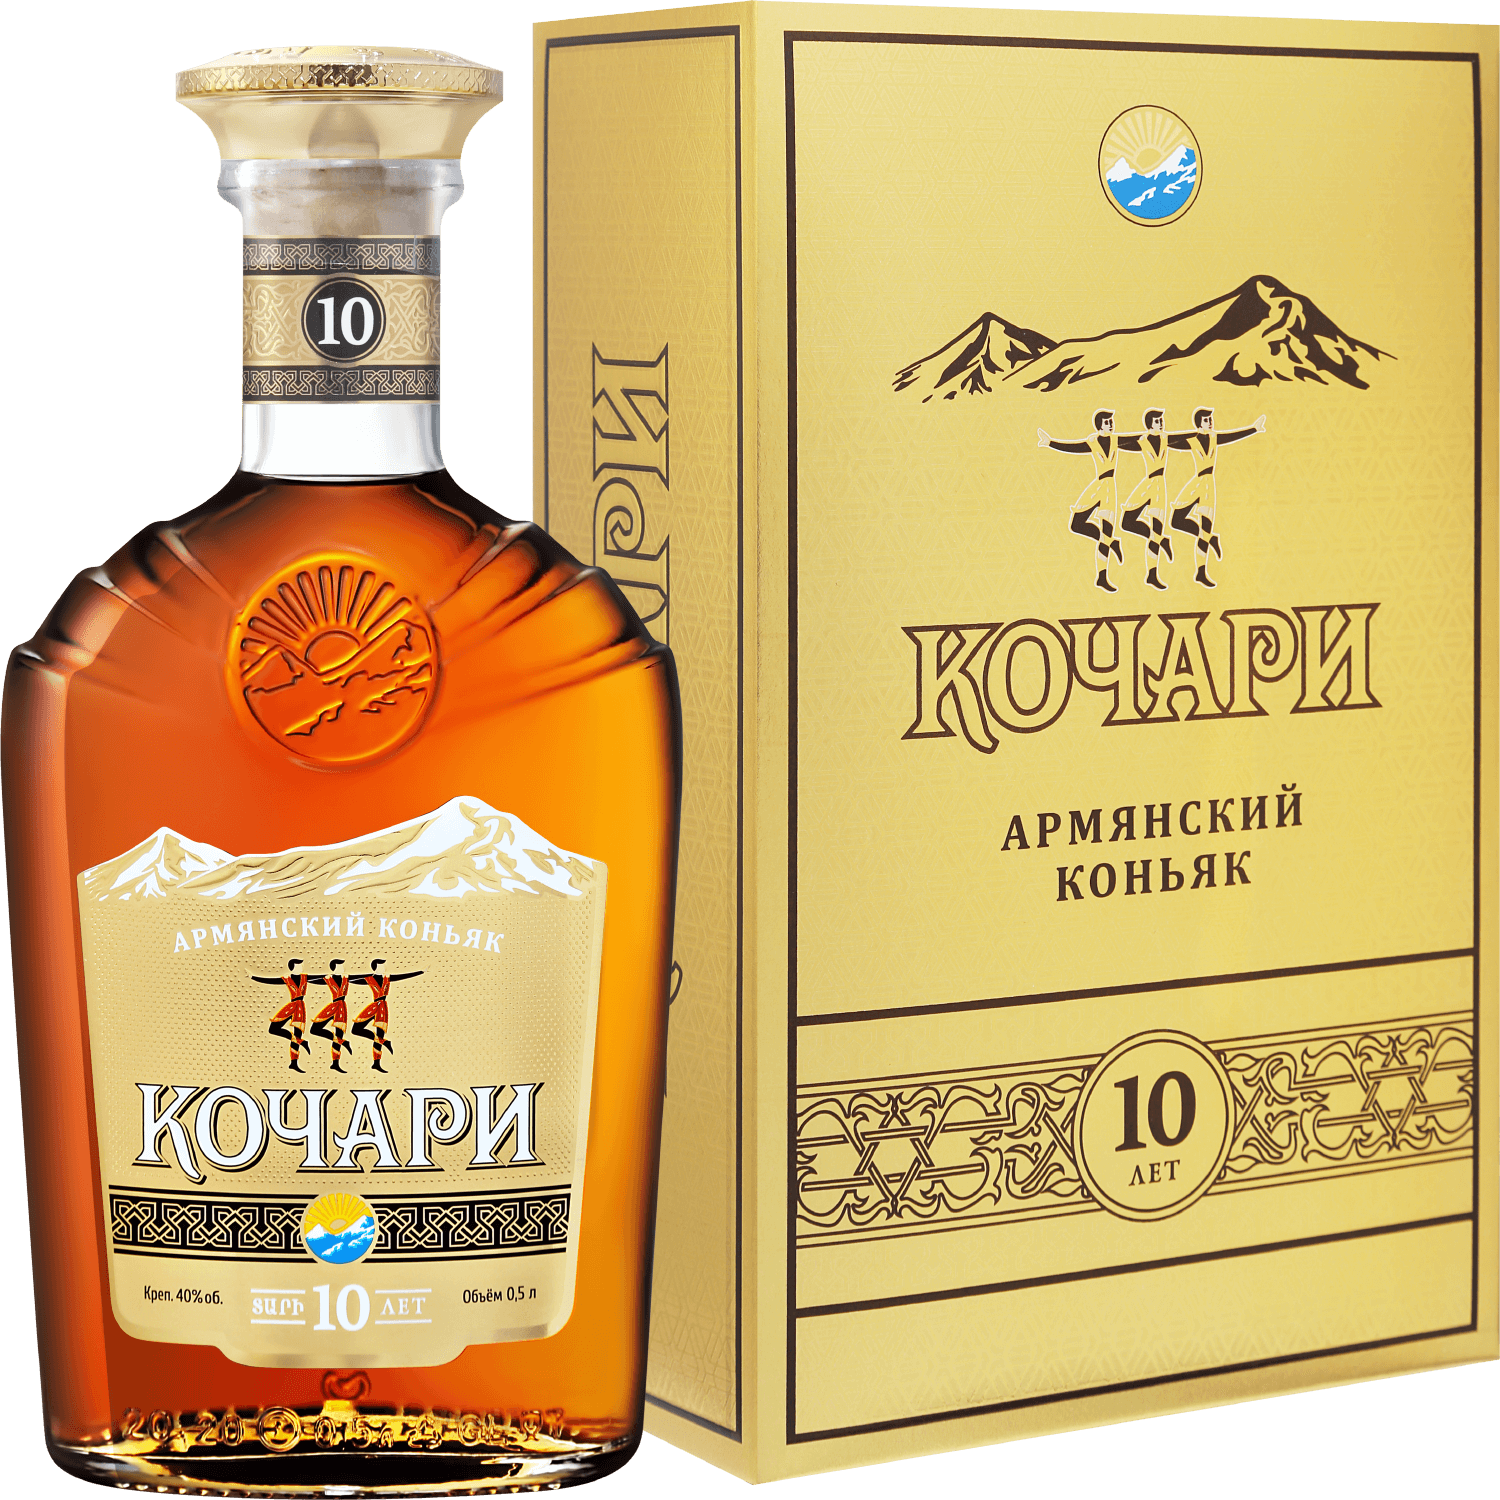 ararat nairi armenian brandy 20 y o gift box Kochari Armenian Brandy 10 Y.O. (gift box)